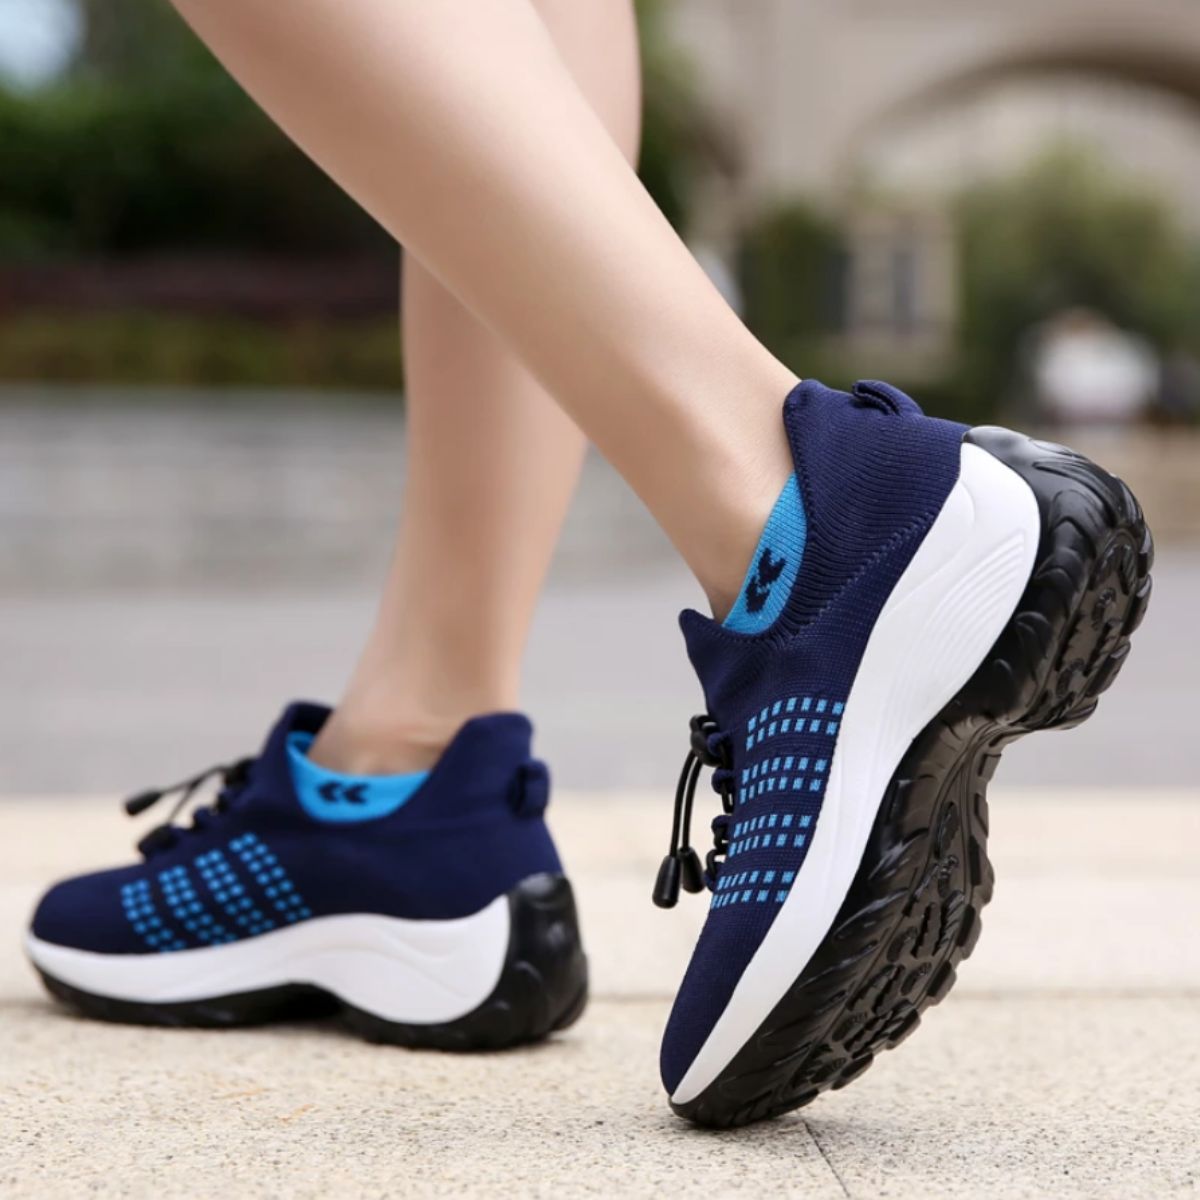 ComforthoFit Cloud Pro – Innovative Pain Relief Footwear